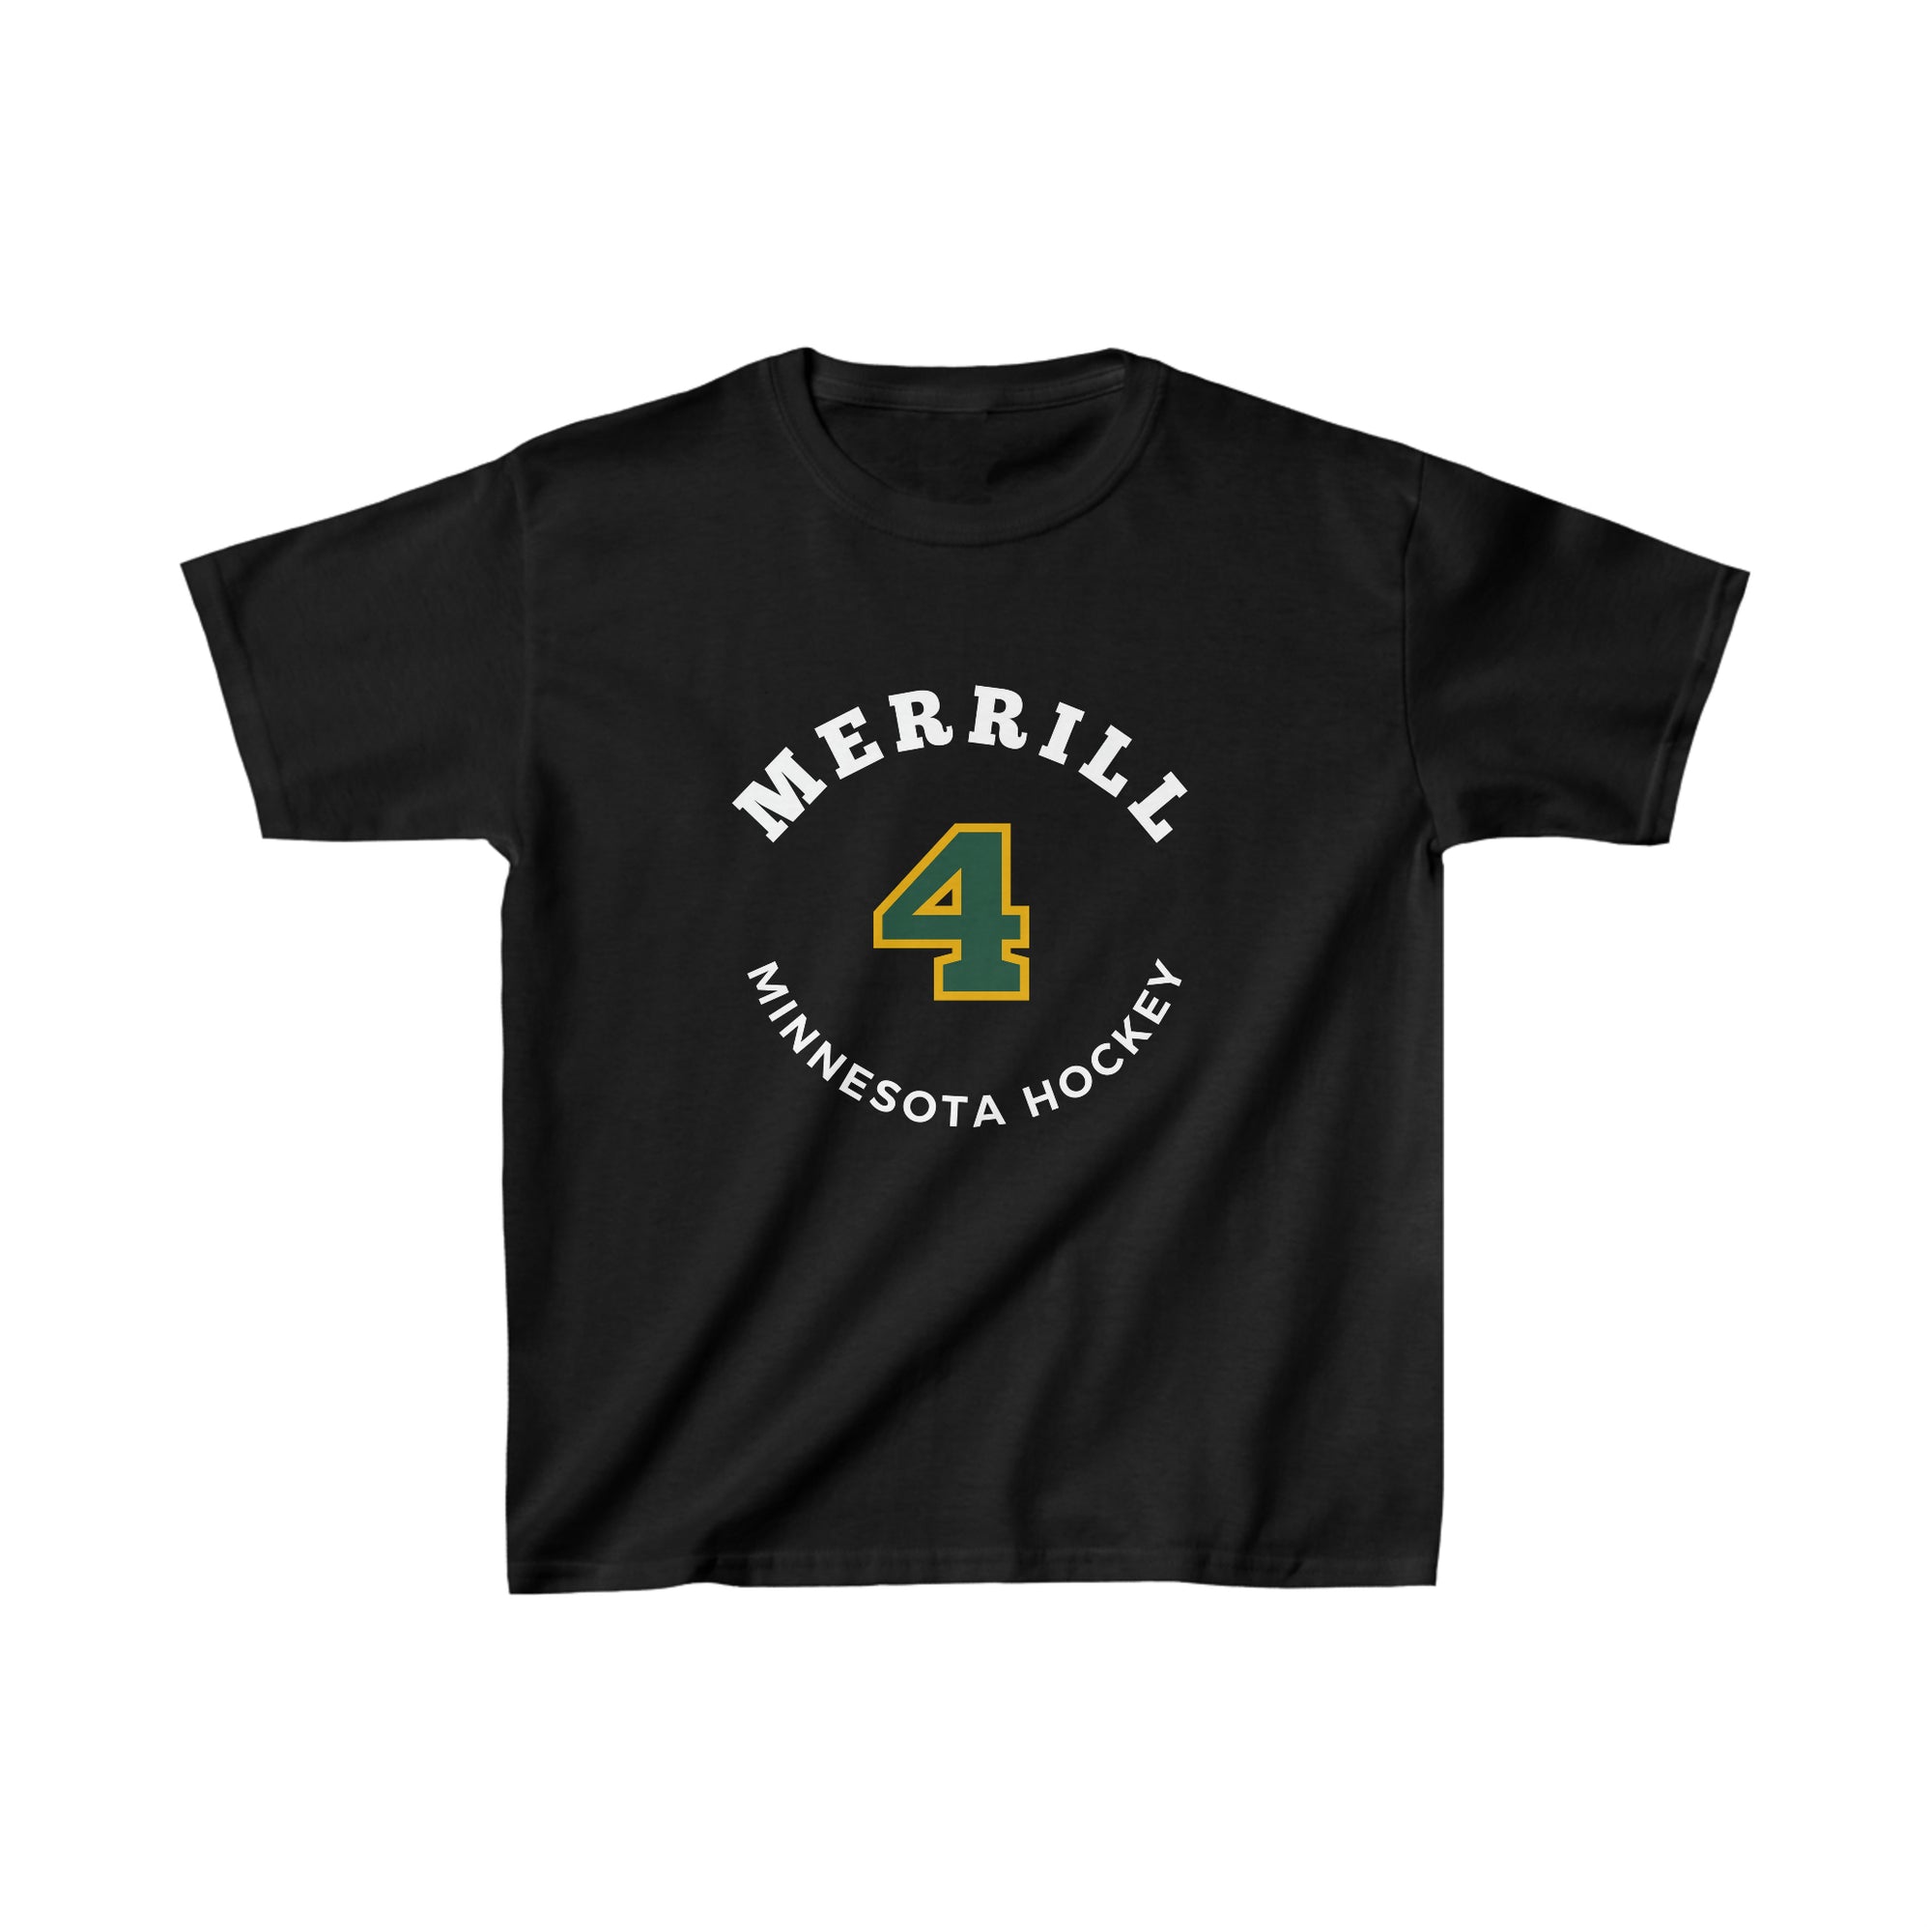 Merrill 4 Minnesota Hockey Number Arch Design Kids Tee